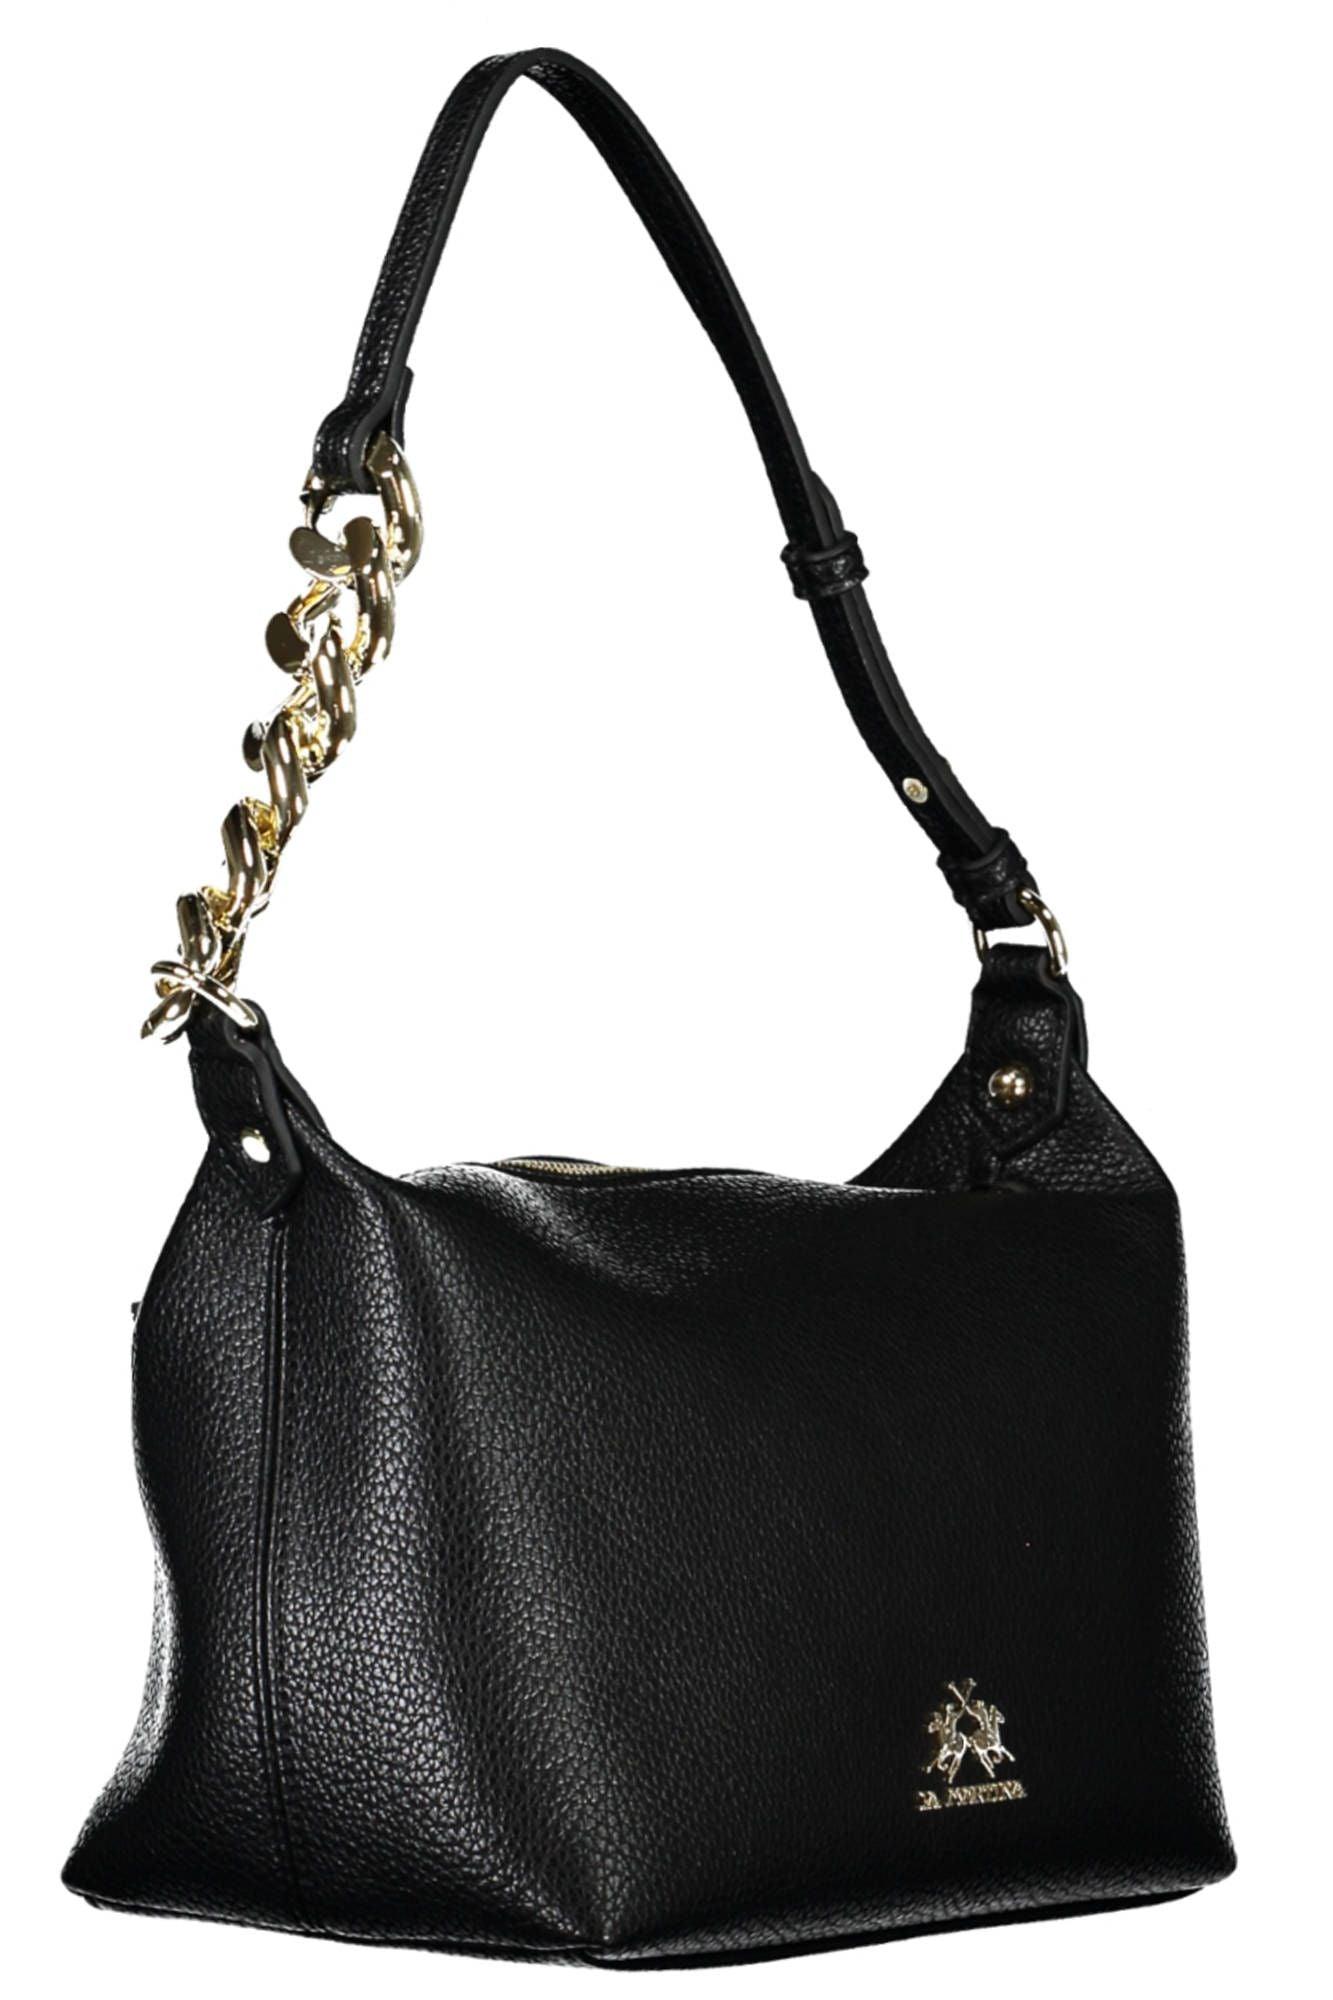 La Martina Chic Black Shoulder Bag with Contrasting Details - PER.FASHION